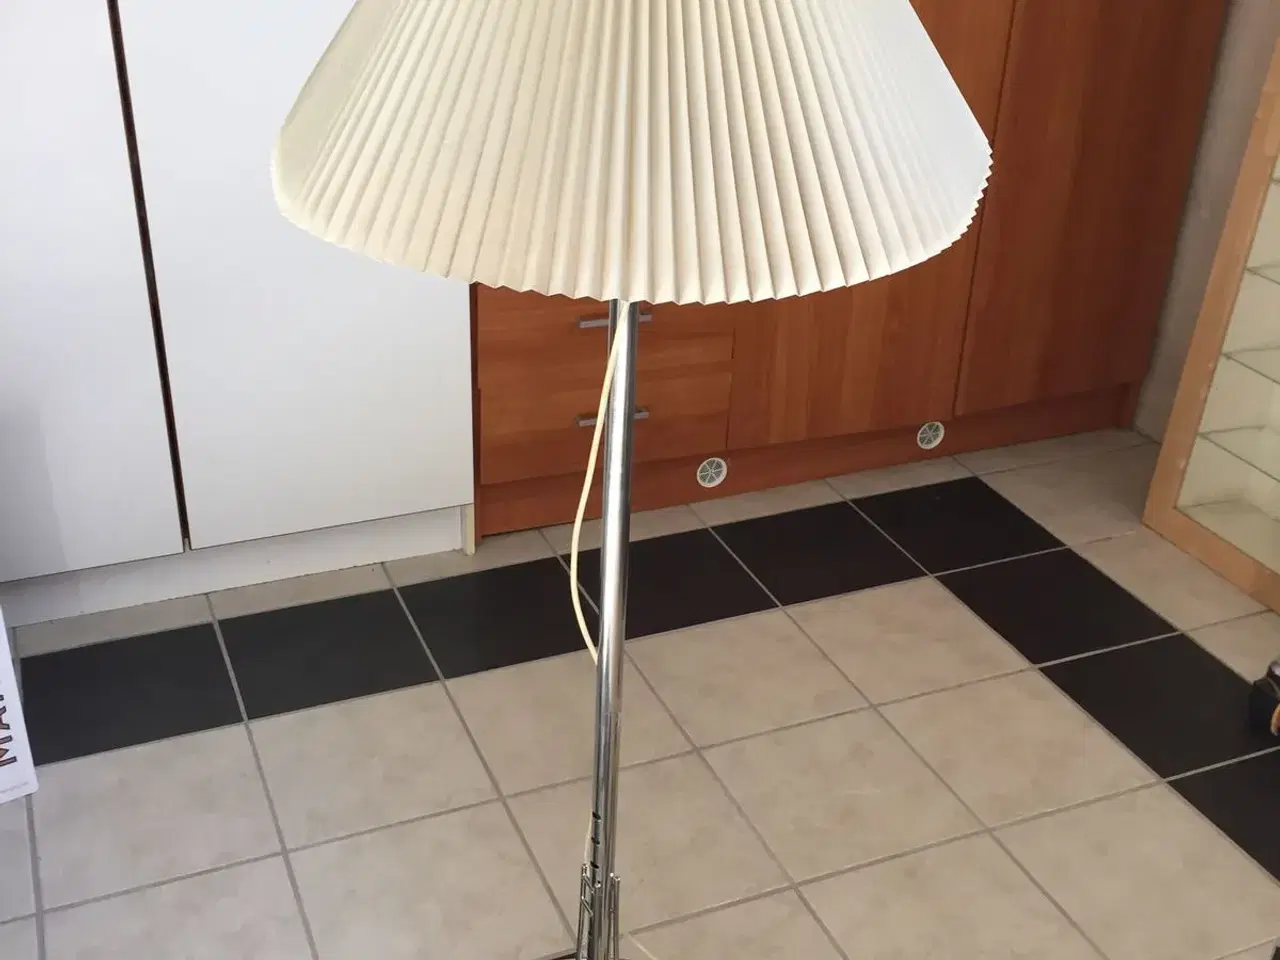 Billede 1 - Gulv lampe med ny skærm